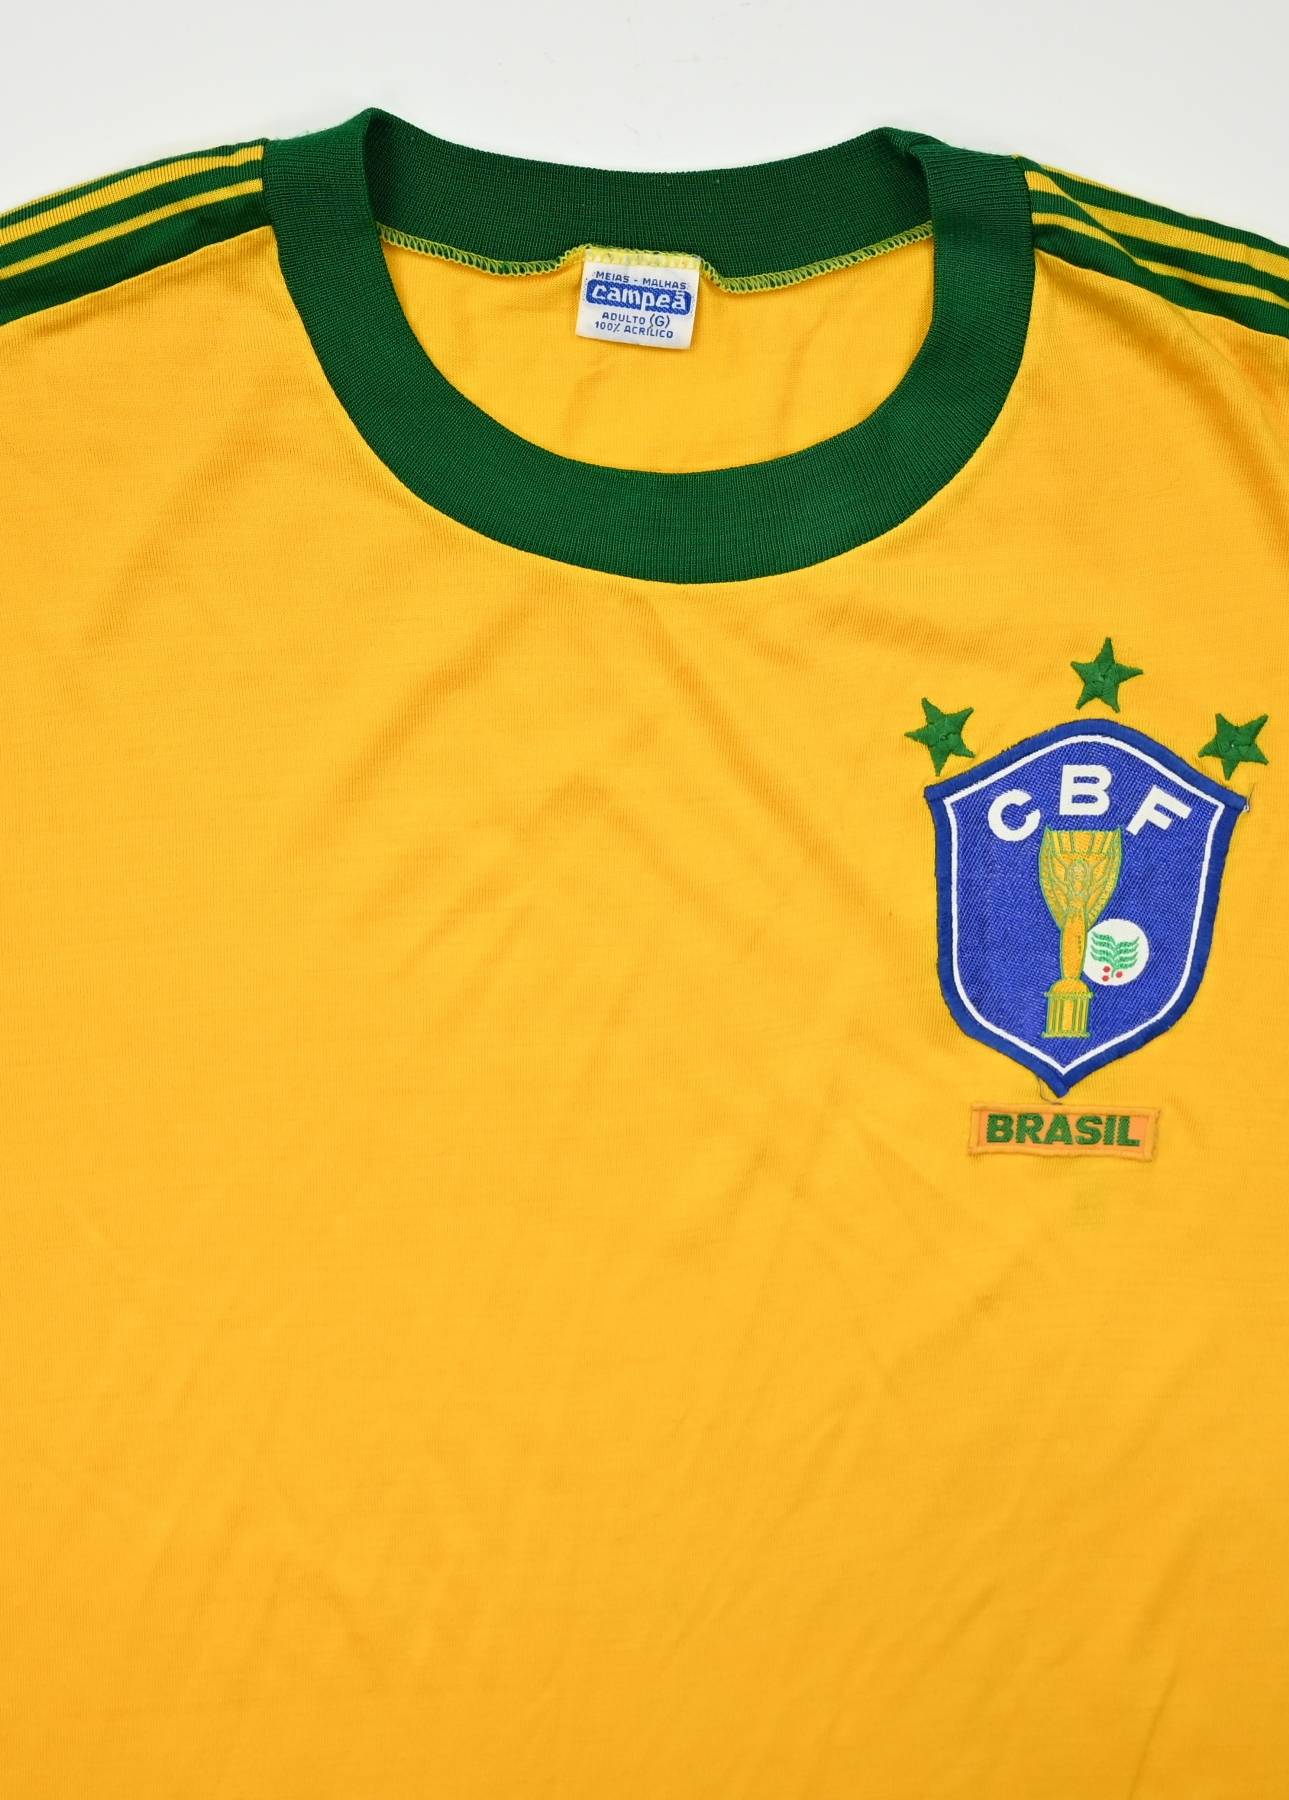 Brazil 1982 Retro Football Shirt